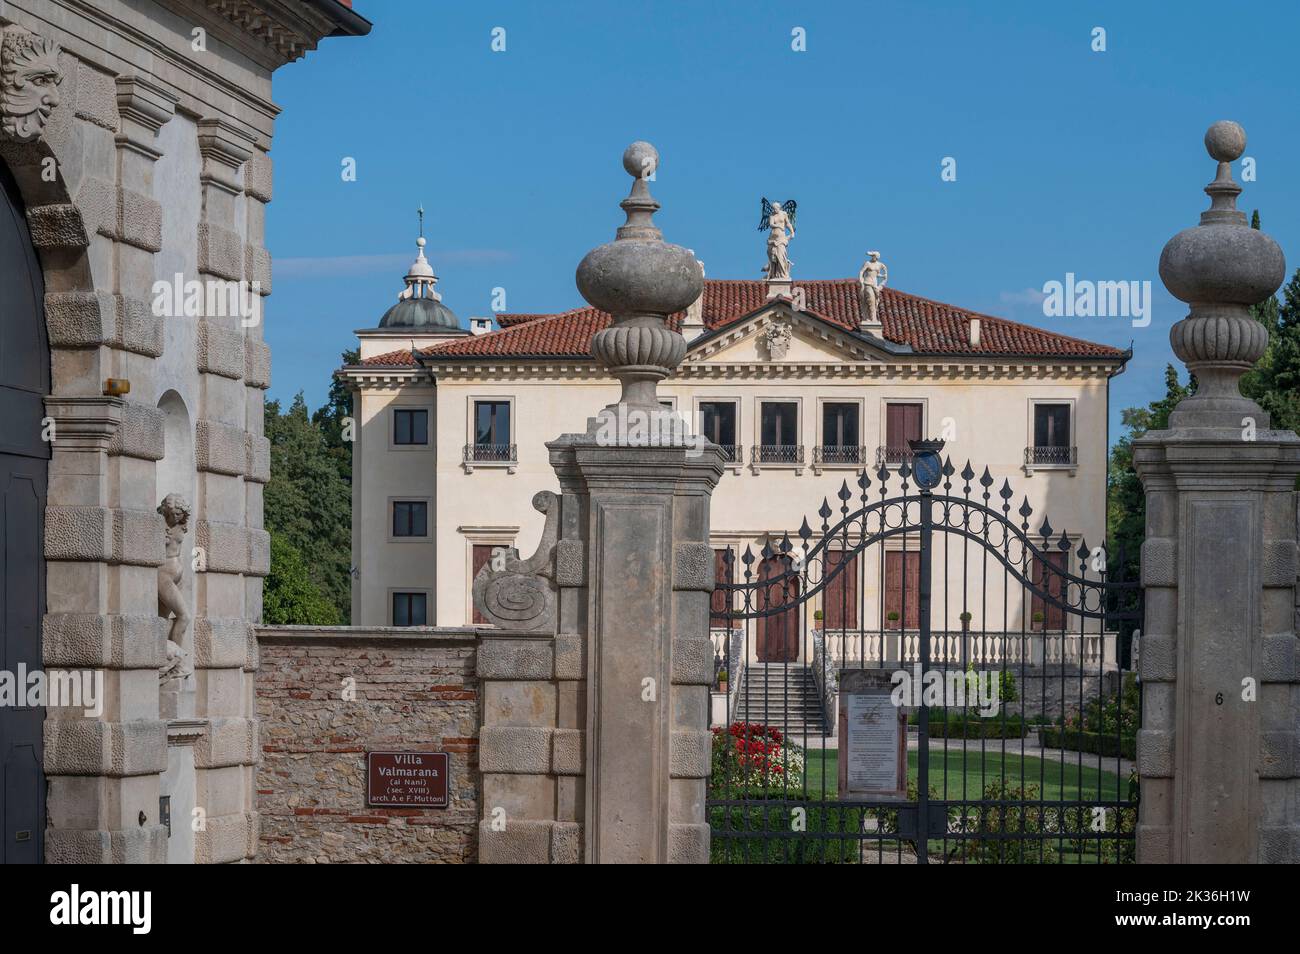 Villa Valmarana ai nani, Vicenza, Venetien, Italien Stockfoto